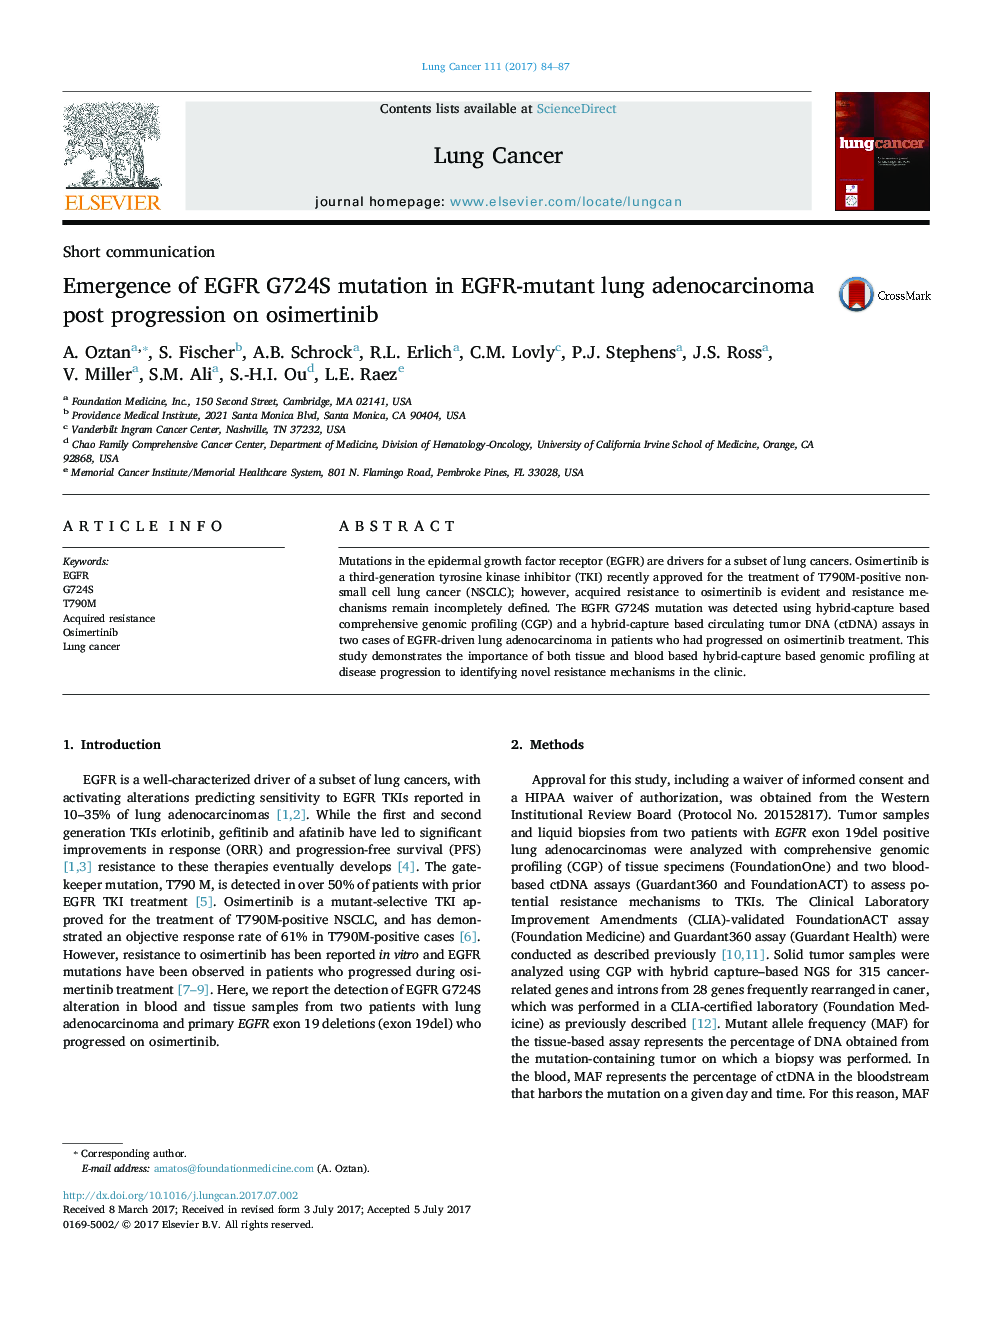 Short communicationEmergence of EGFR G724S mutation in EGFR-mutant lung adenocarcinoma post progression on osimertinib